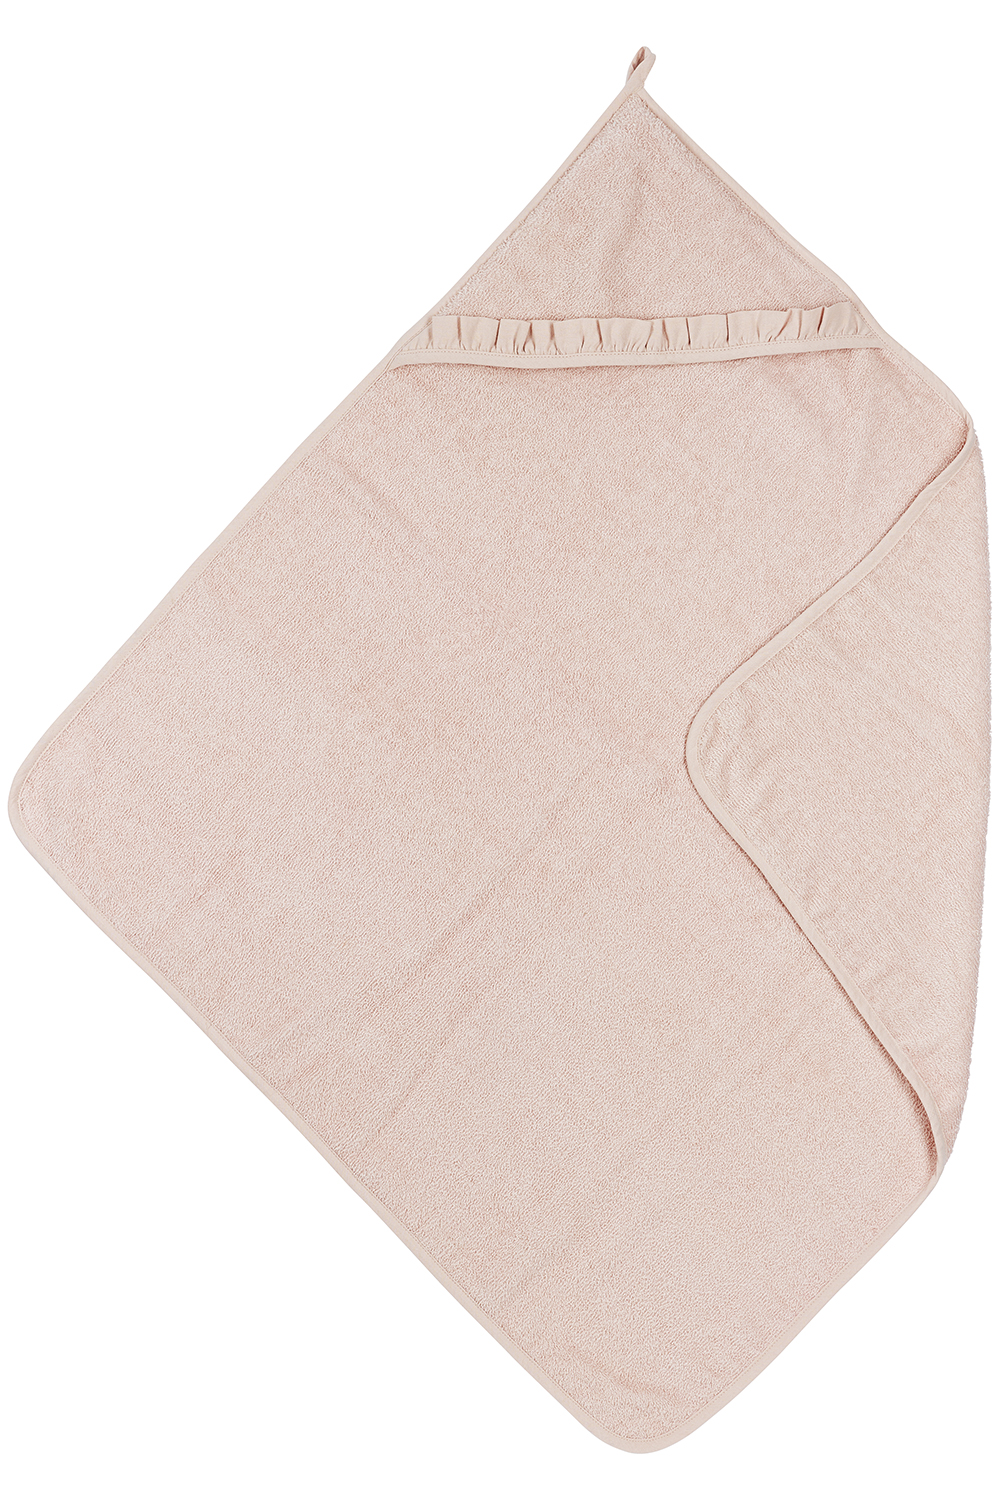 Bathcape terry Ruffle - soft pink - 80x80cm